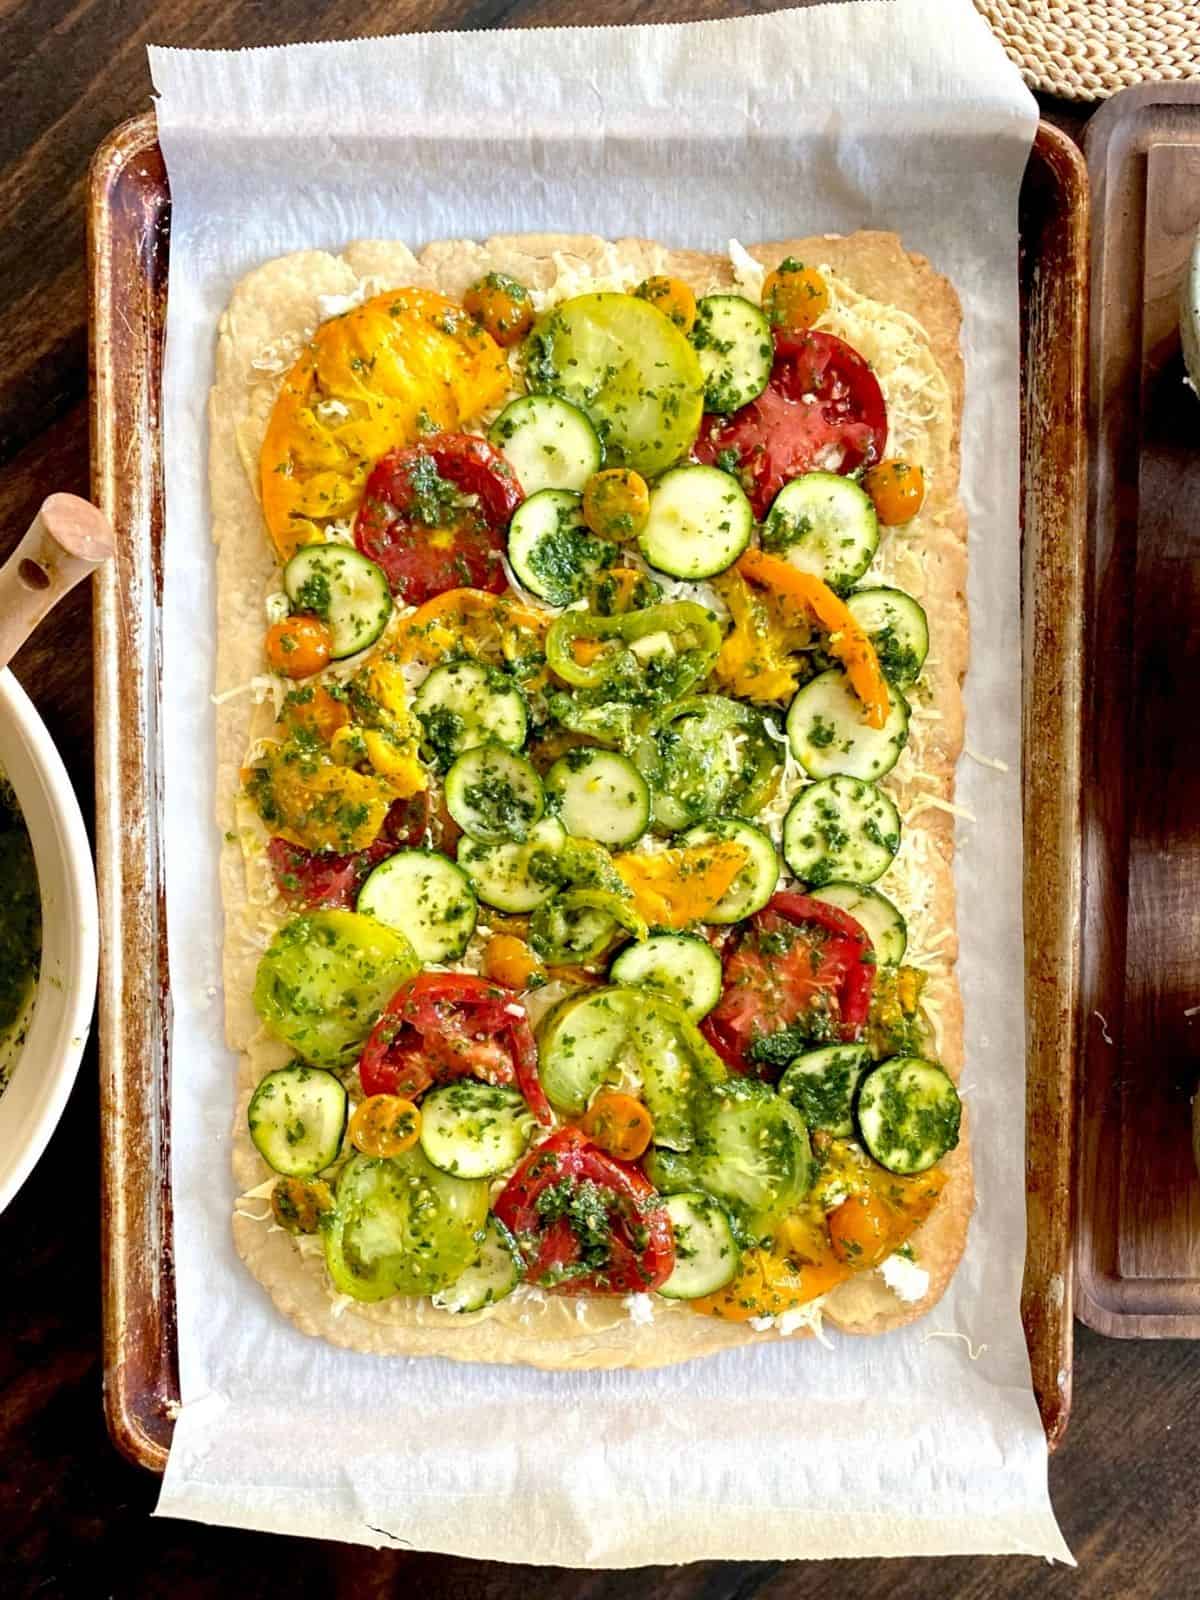 garden tart topped with veggies